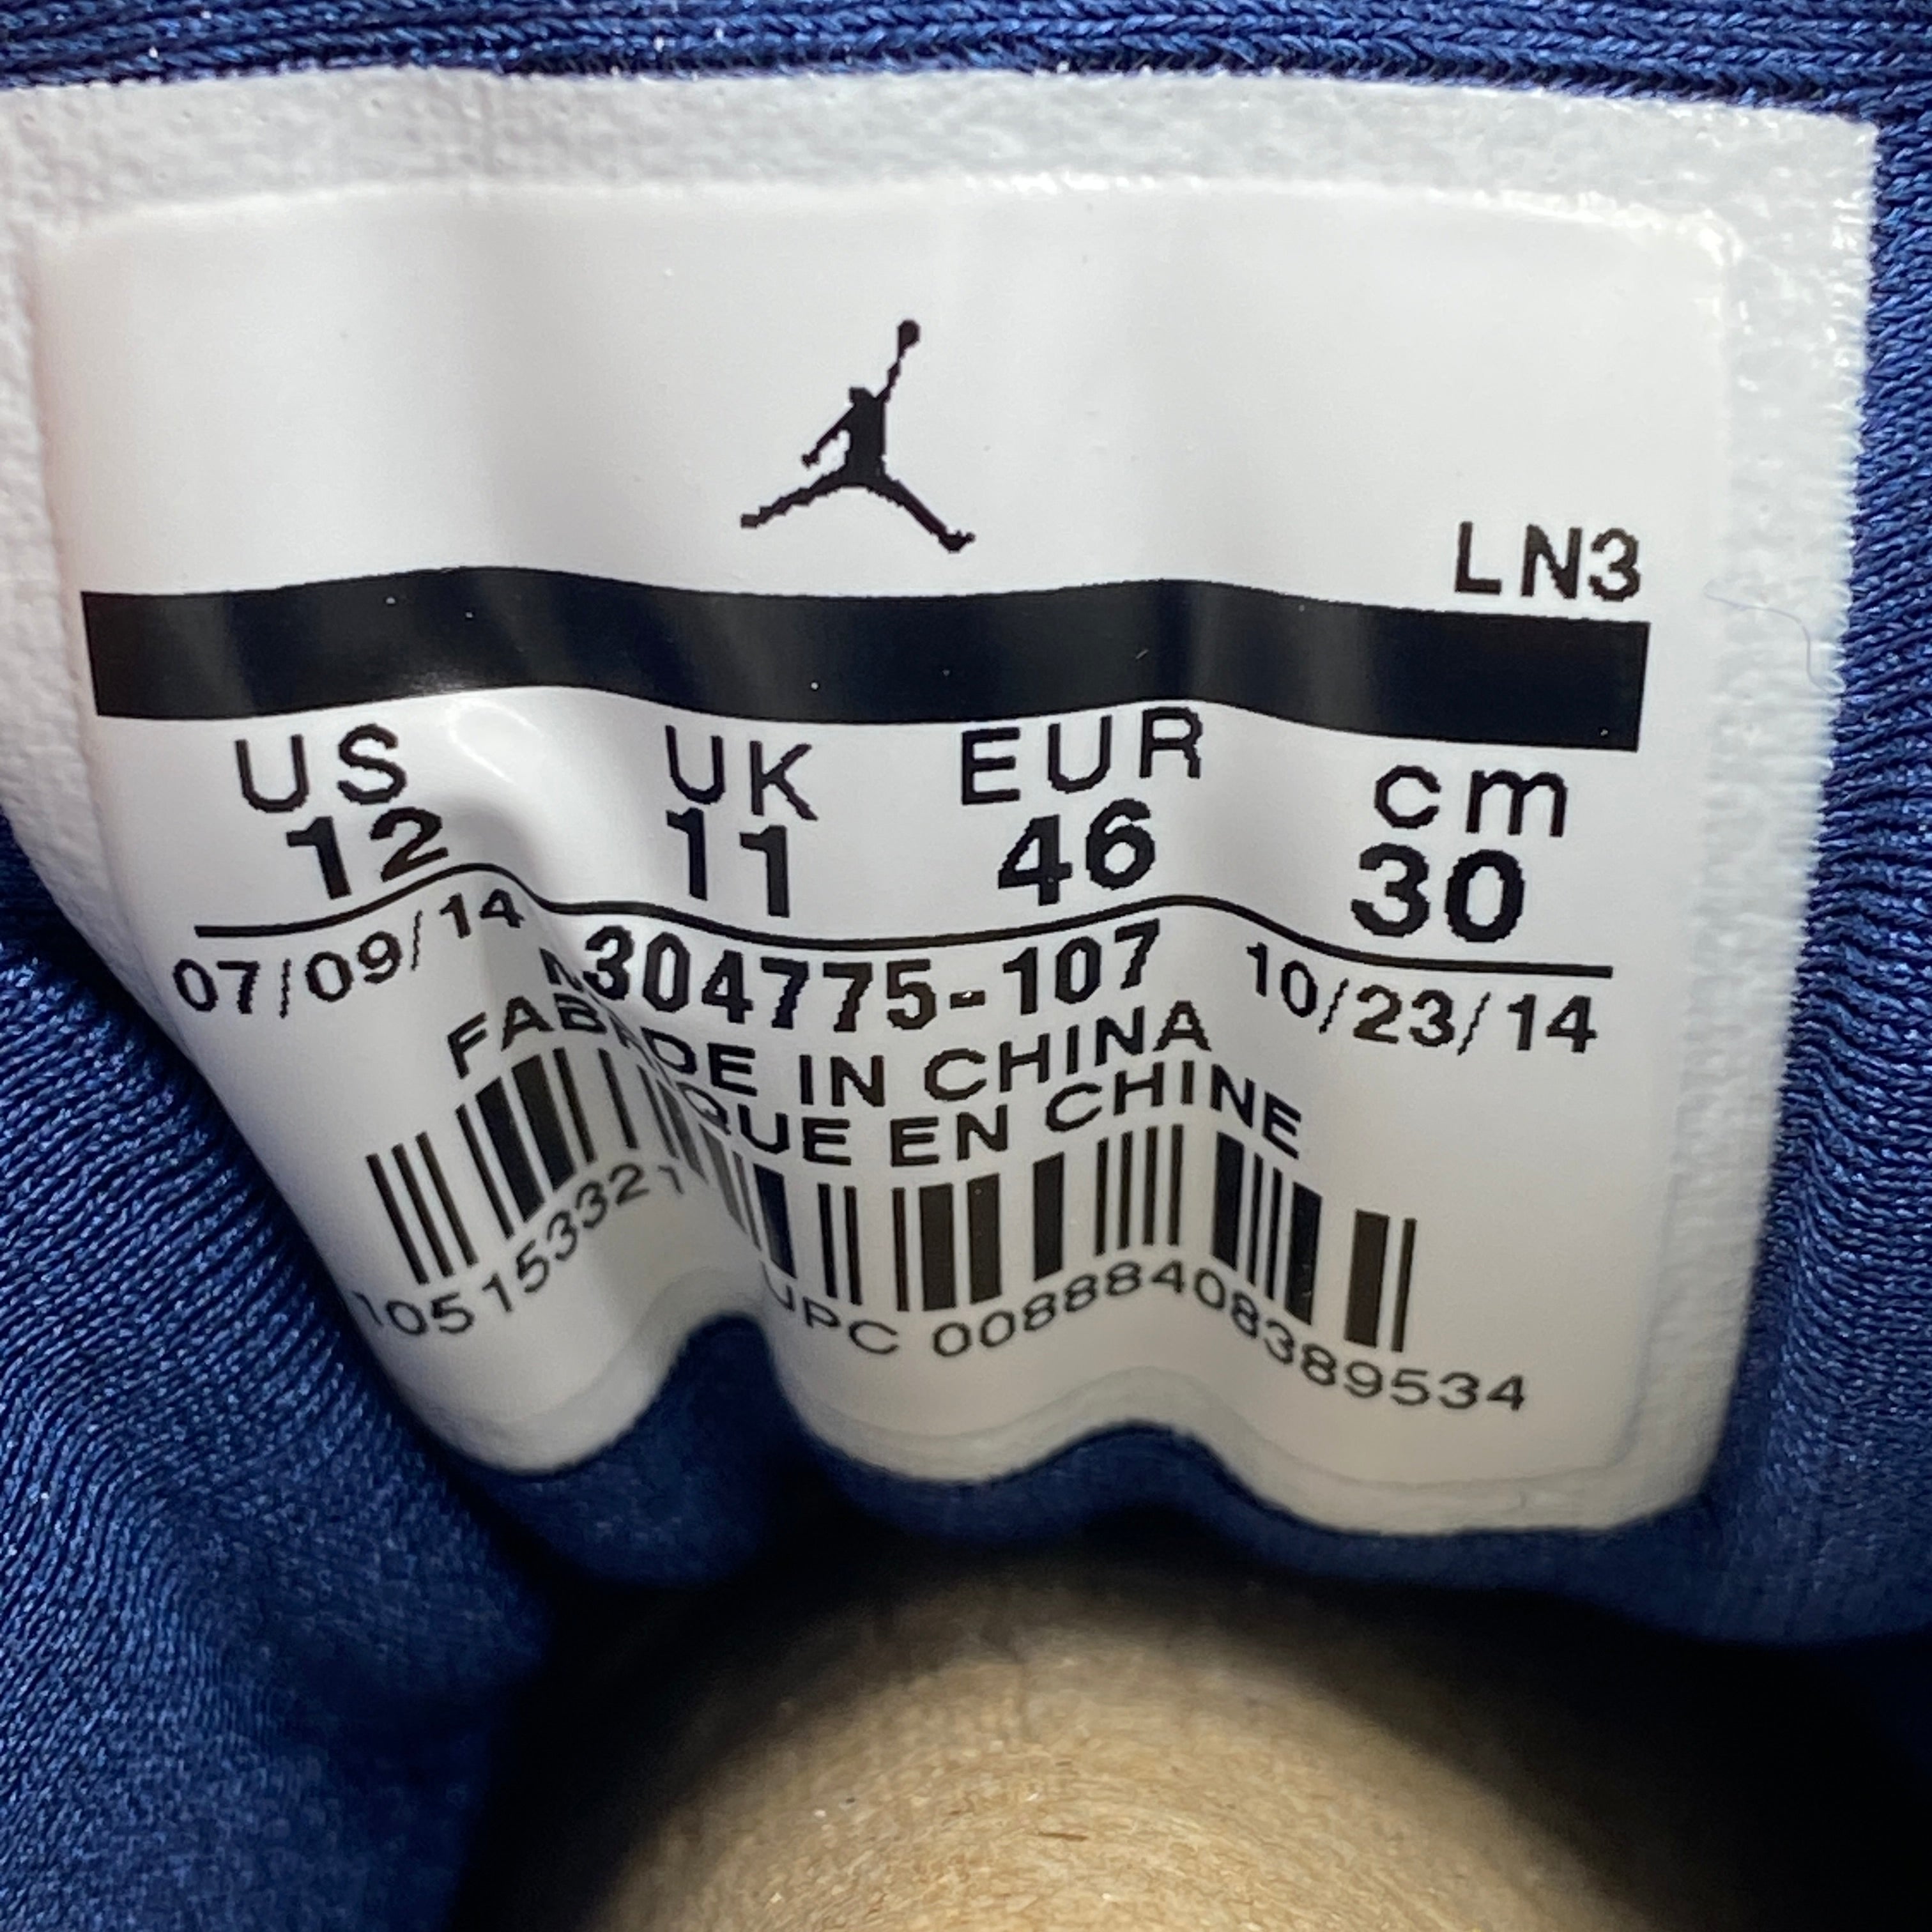 Air Jordan 7 Retro "French Blue" 2014 New Size 12